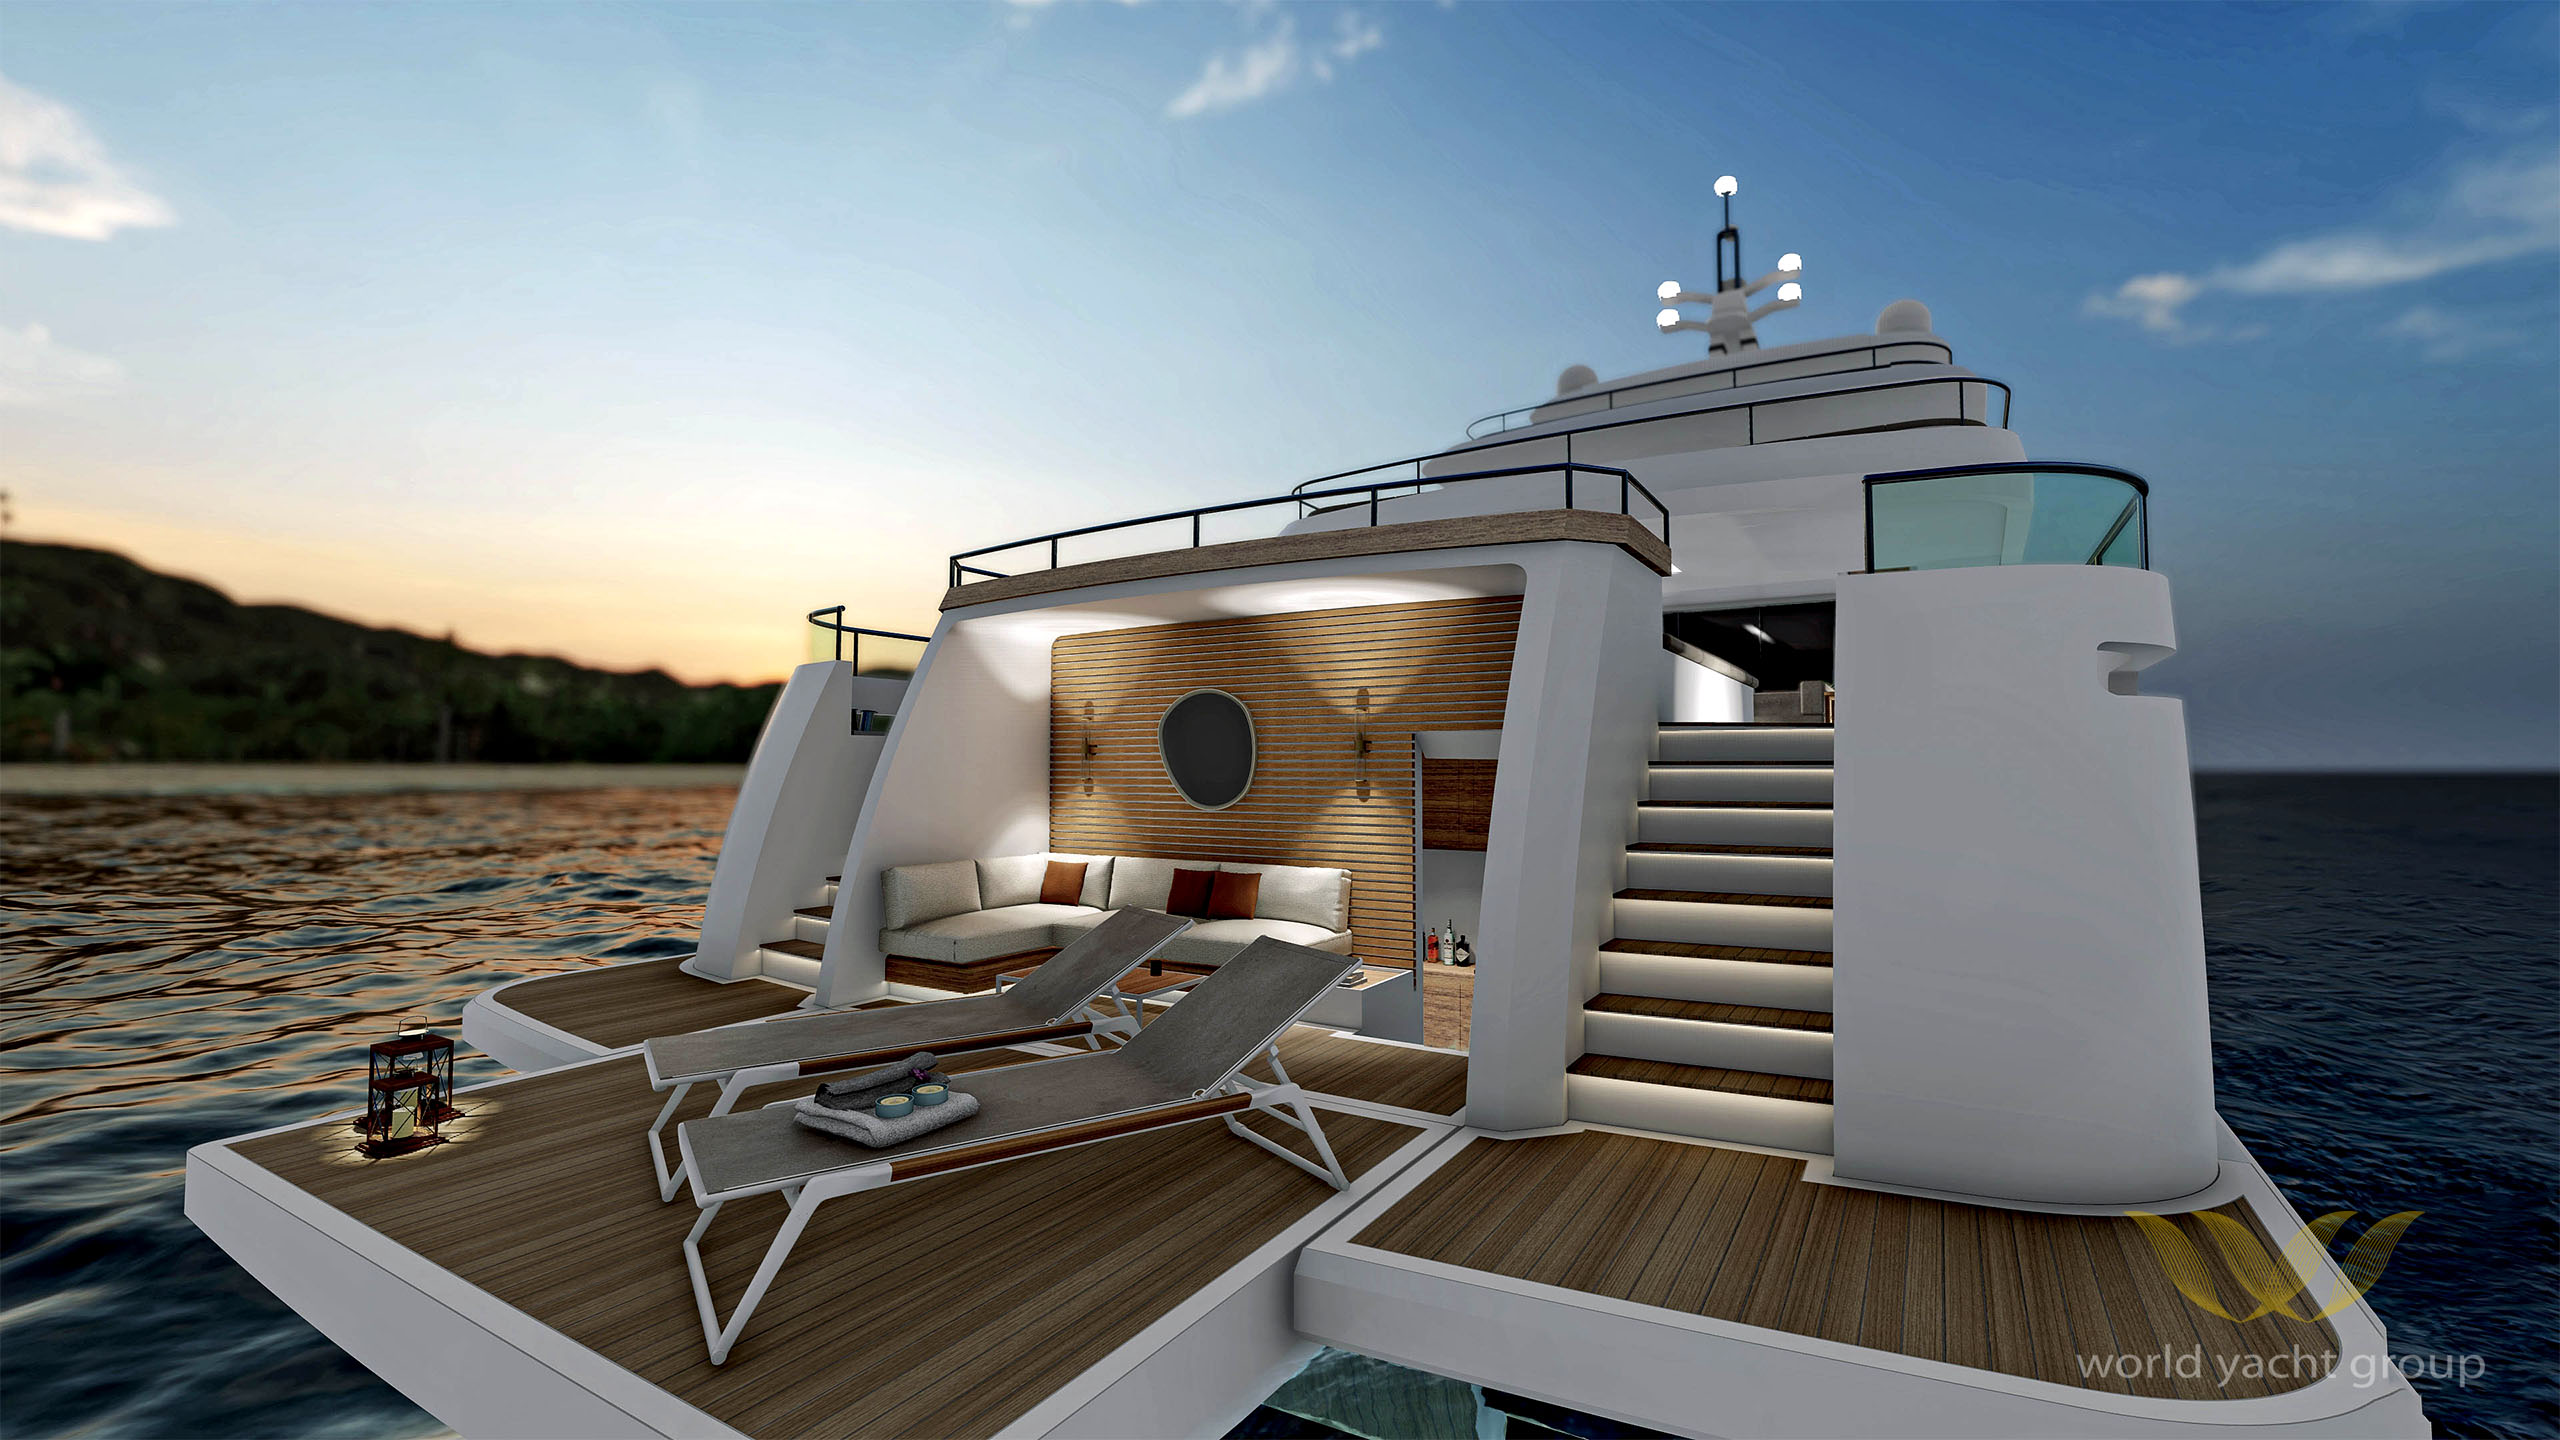 Project-Artemis-World-Yacht-Group-Yacht-For-Sale-Beach-Club